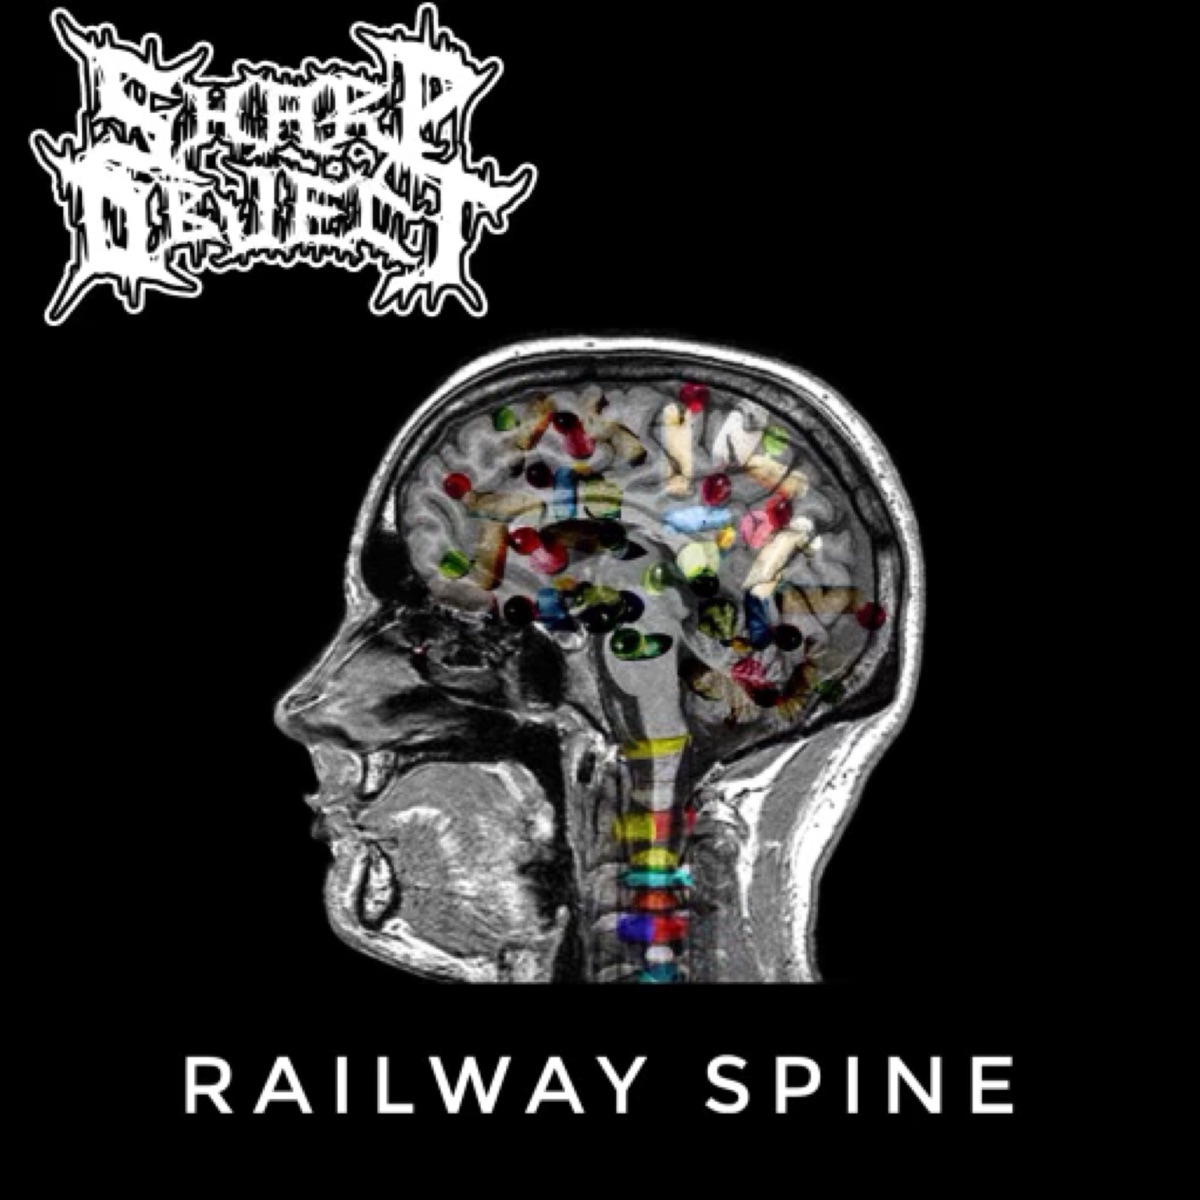 Railway Spine - EP - Album by SHARP OBJECT - Apple Music